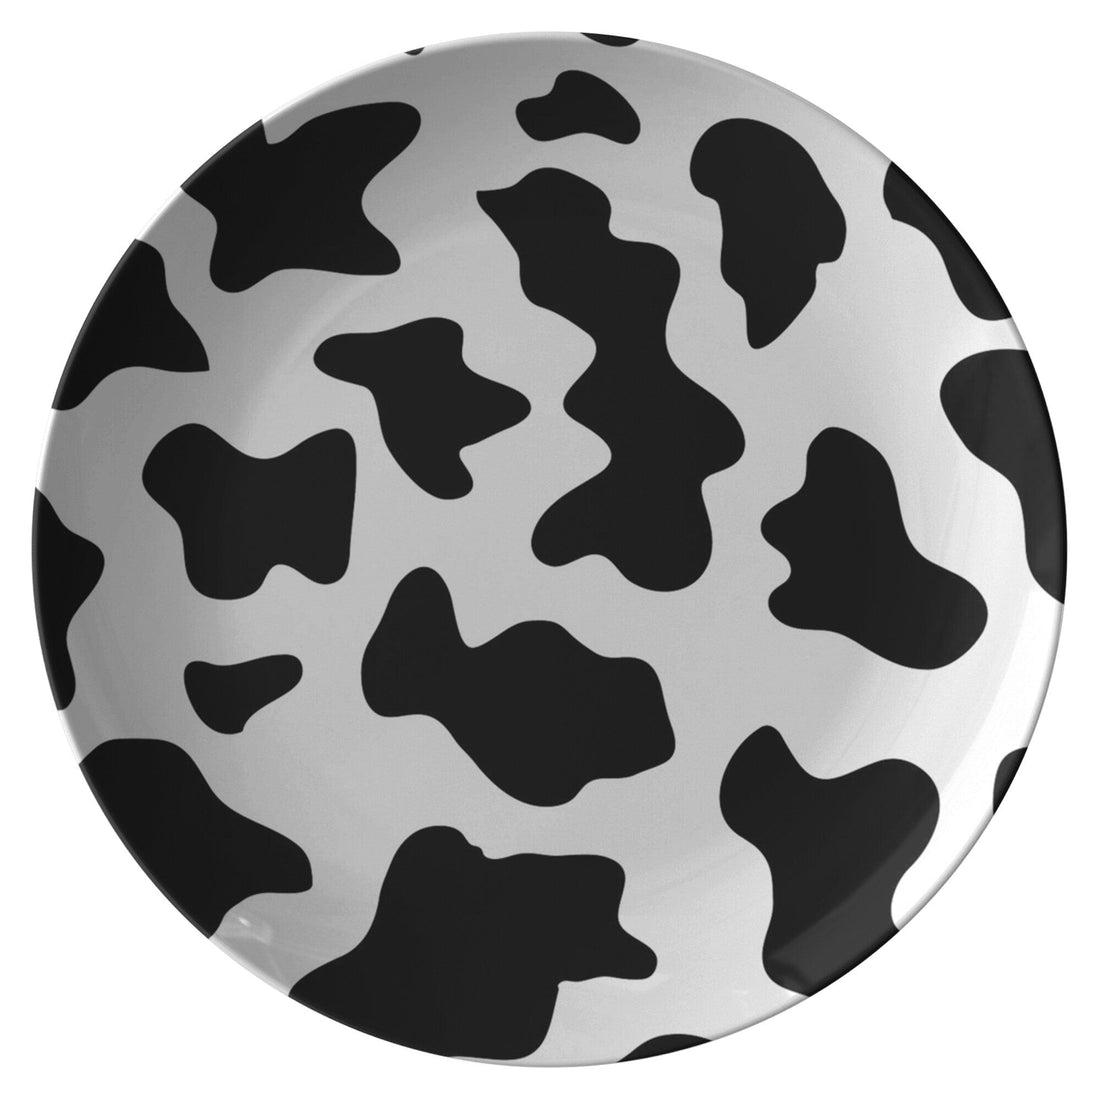 Kate McEnroe New York Dinner Plates in Black and White Cow PrintPlates9820SINGLE